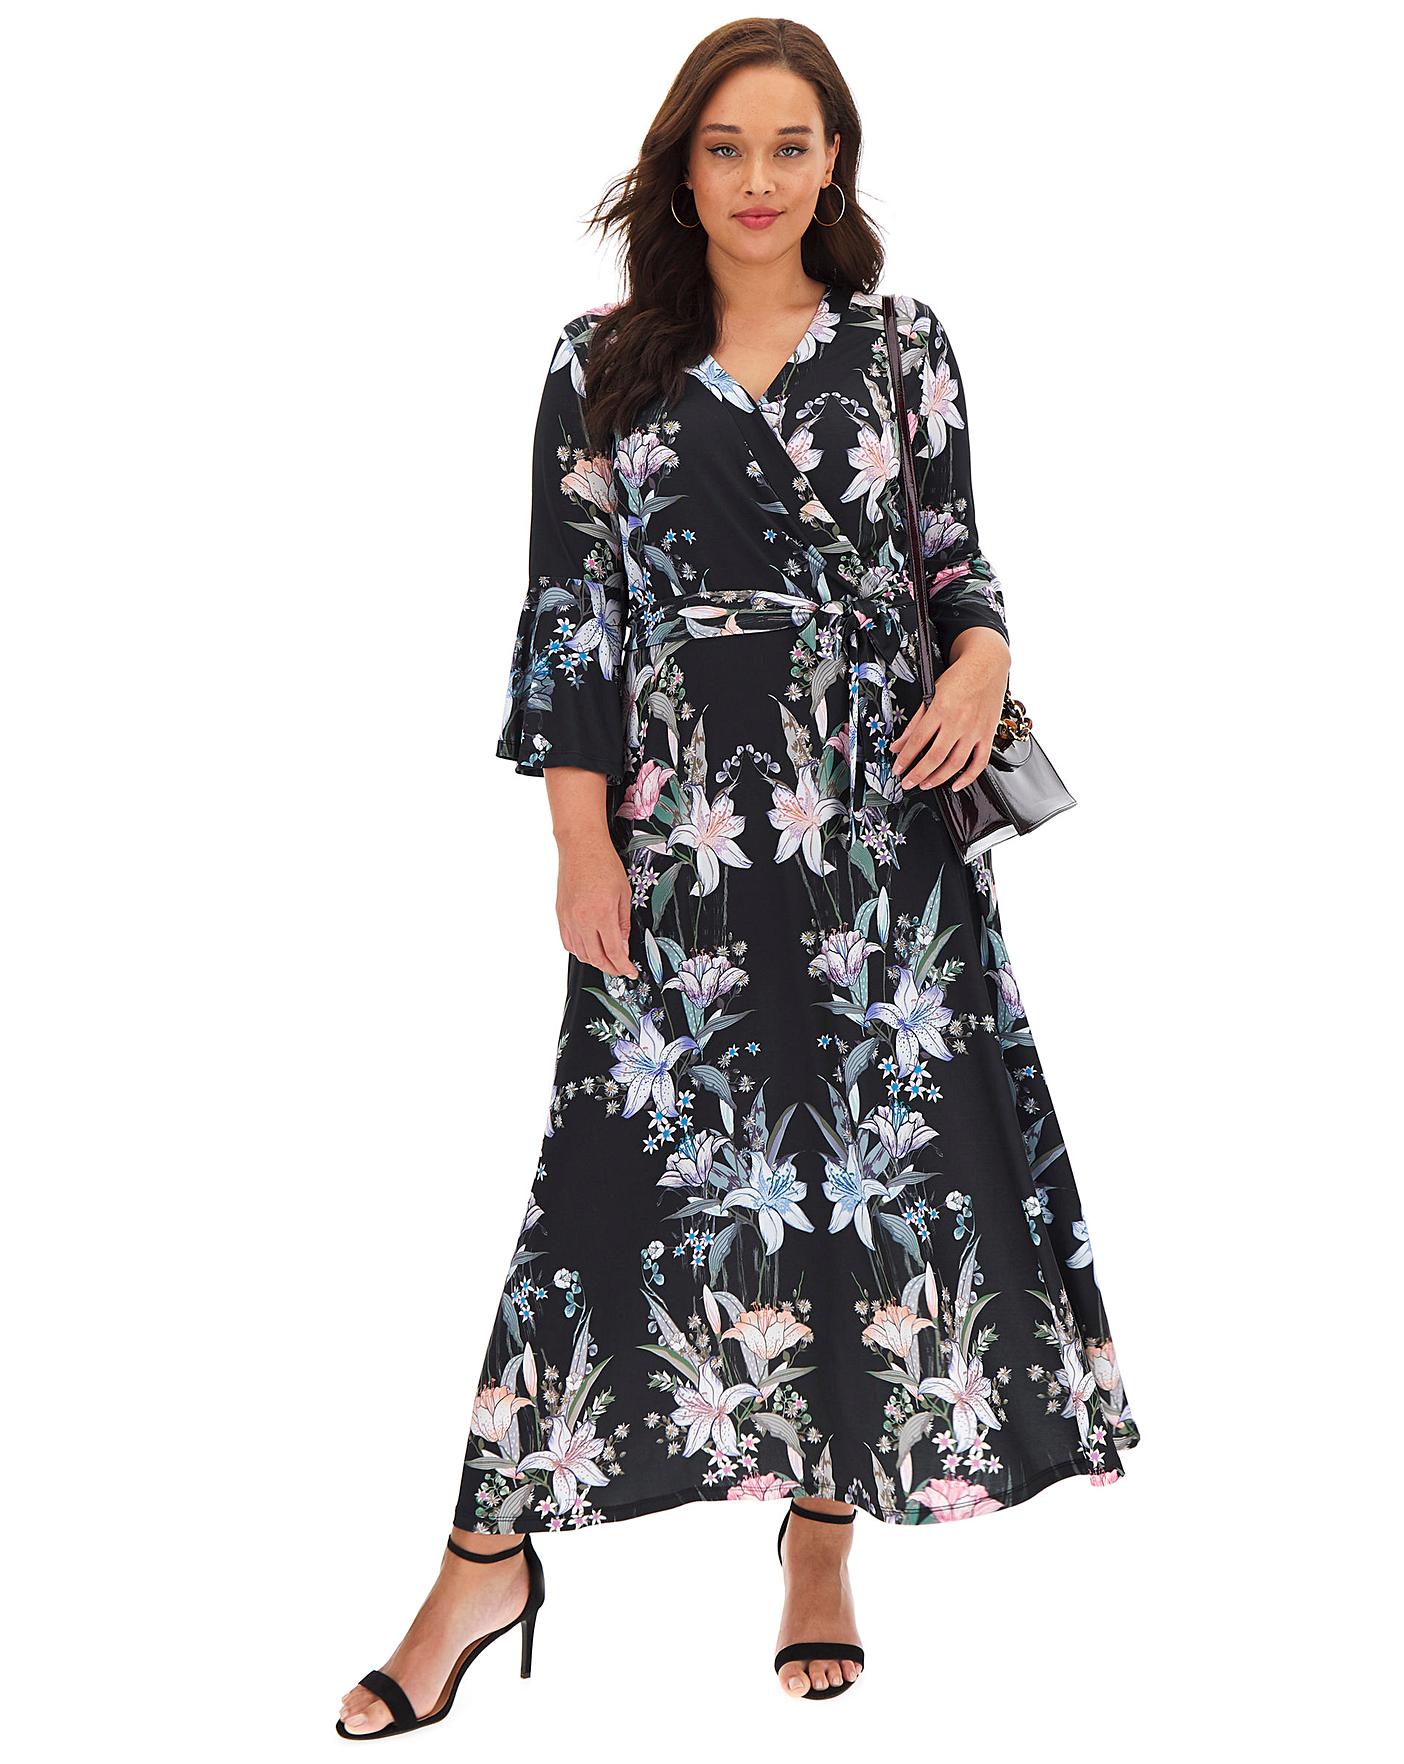 Joanna Hope Black Print Wrap Maxi Dress | Simply Be